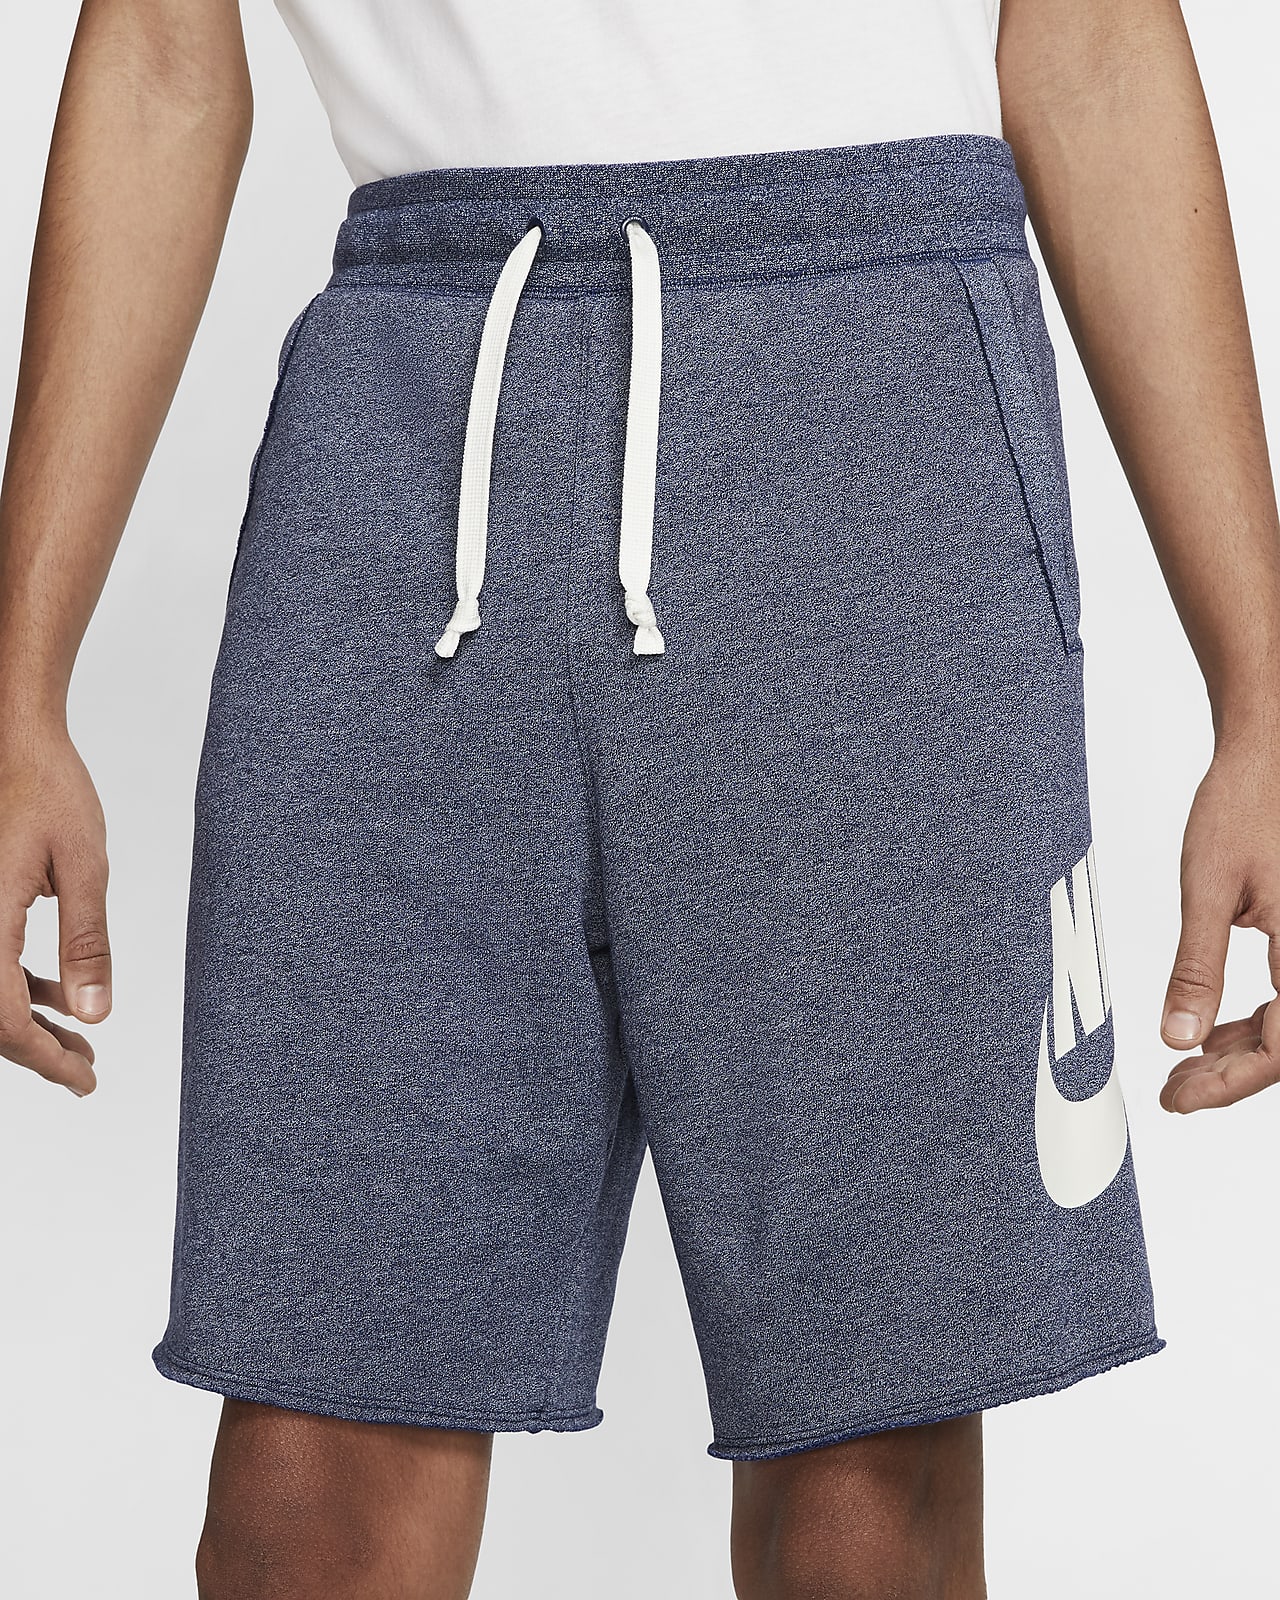 French Terry Shorts. Nike LU